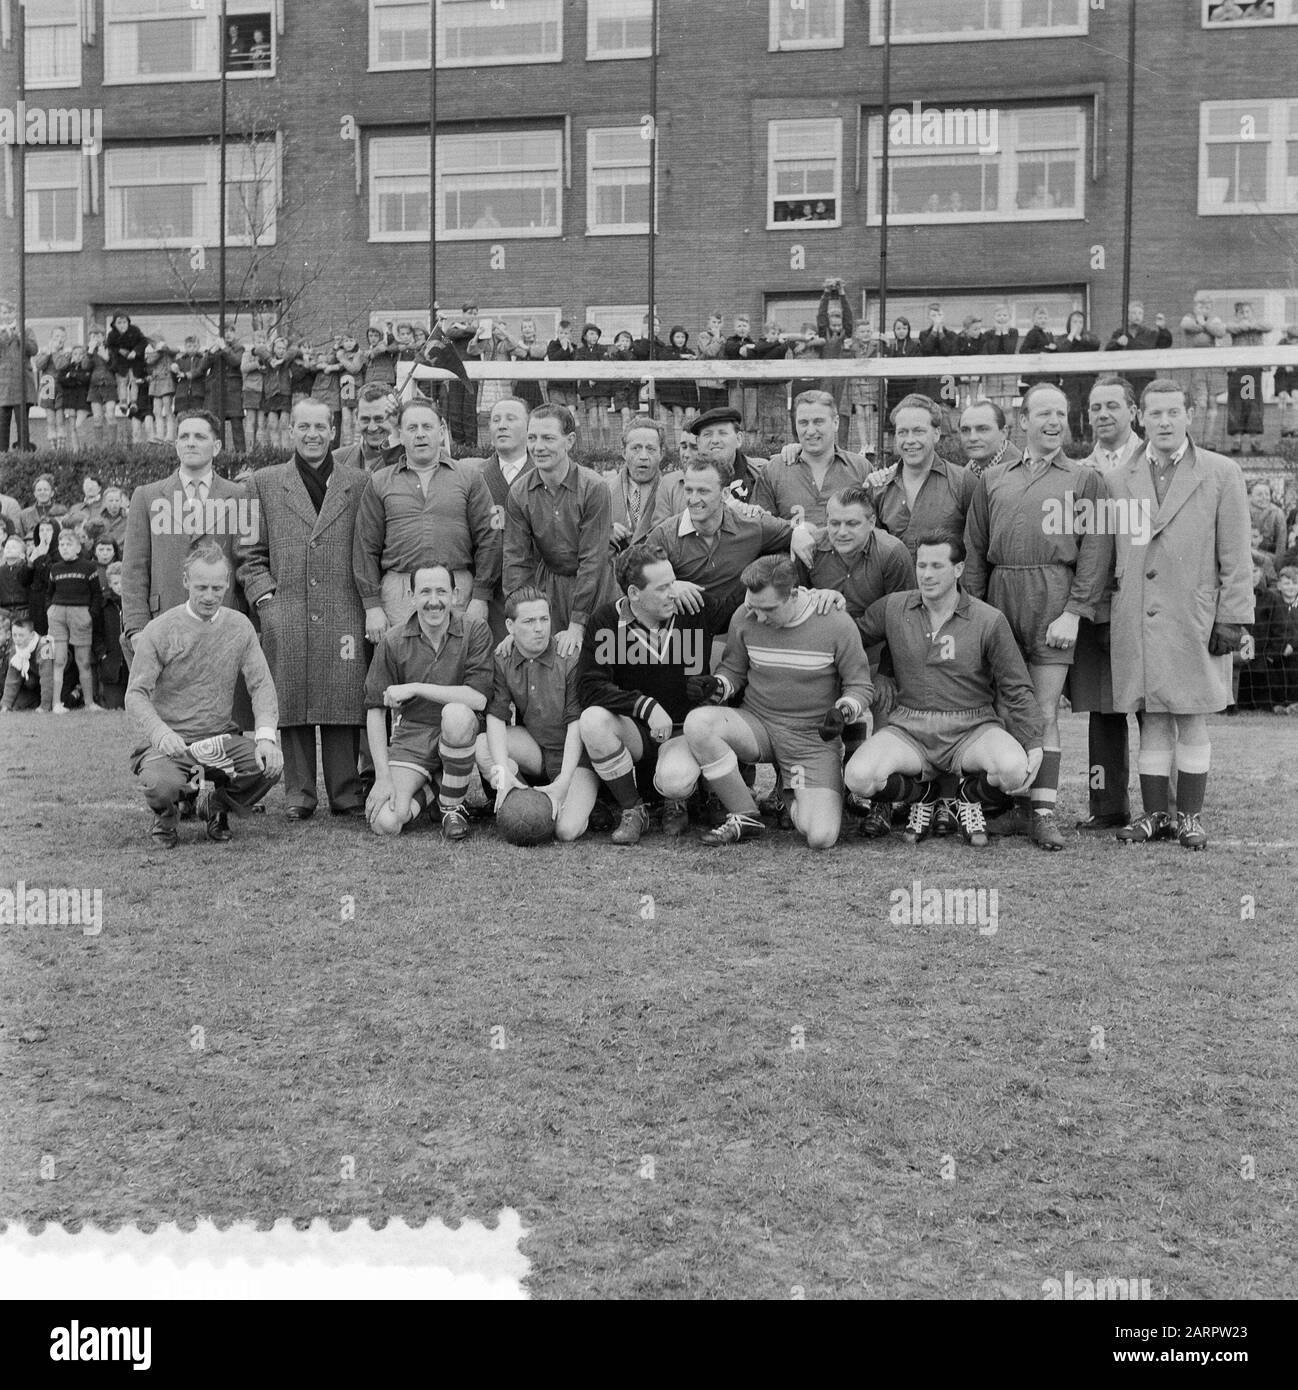 Football. AVRO versus Club of 100. Club of 100 team Date: 10 April 1957 Keywords: teams, sports, football Institution name: AVRO Stock Photo